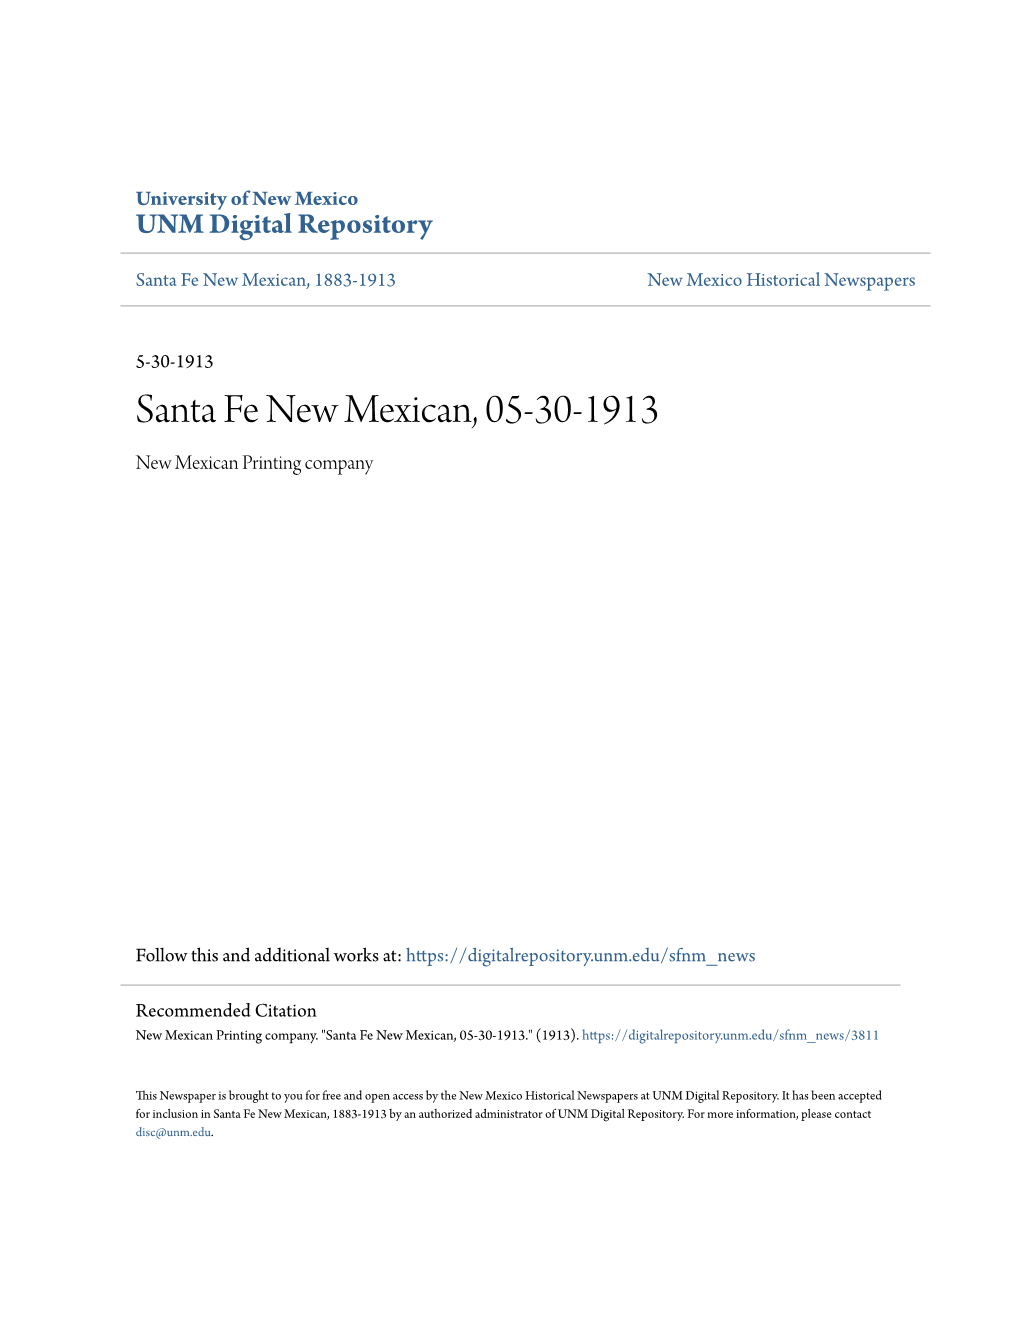 Santa Fe New Mexican, 05-30-1913 New Mexican Printing Company